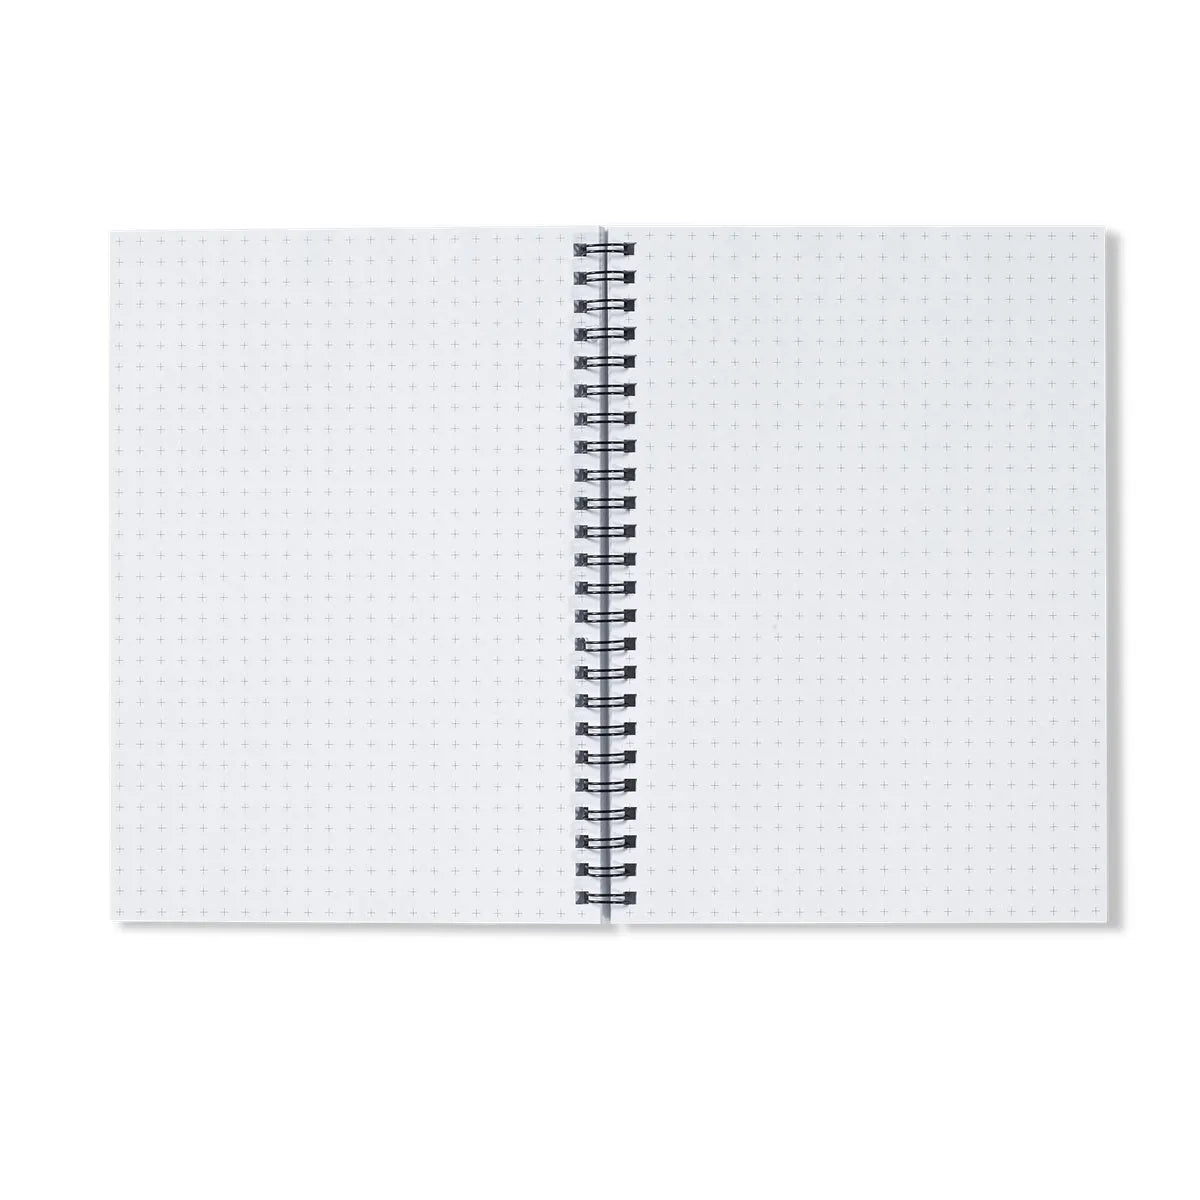 Spiked Notebook - Notebooks & Notepads - Aesthetic Art